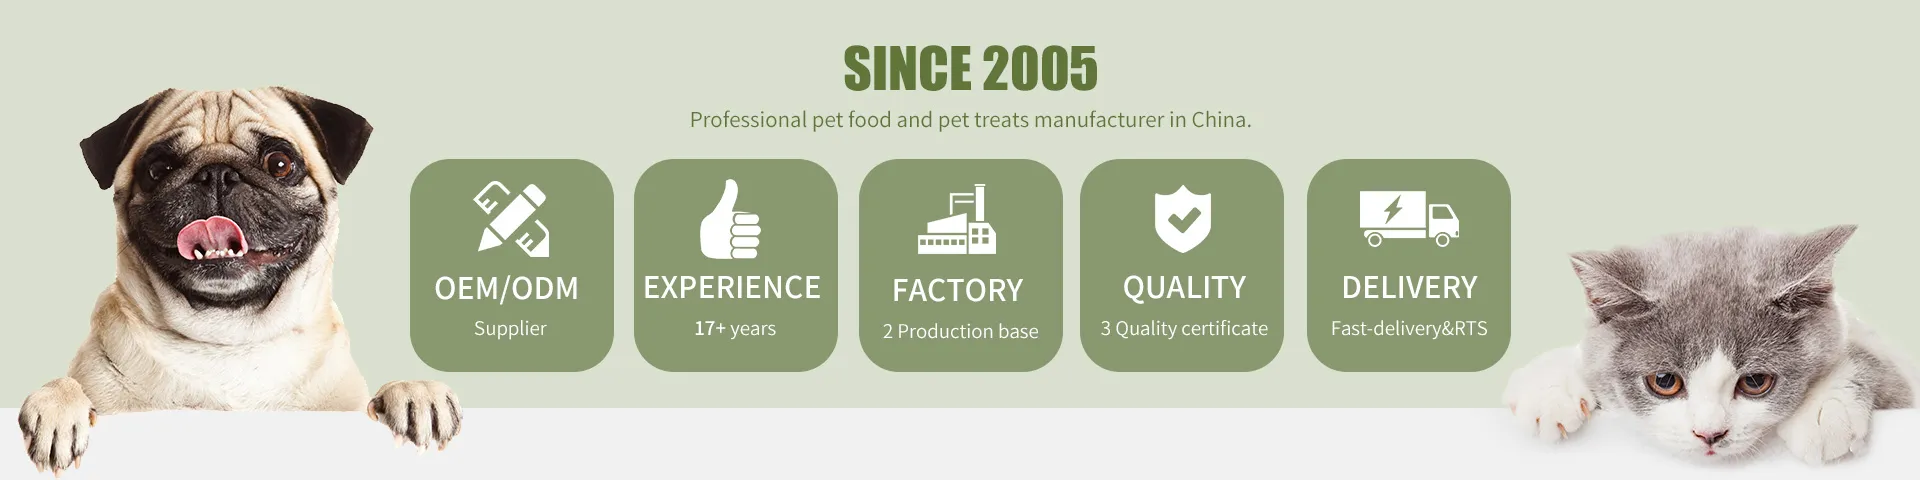 Dog Food Cat Food Pet treats manufacturer in China